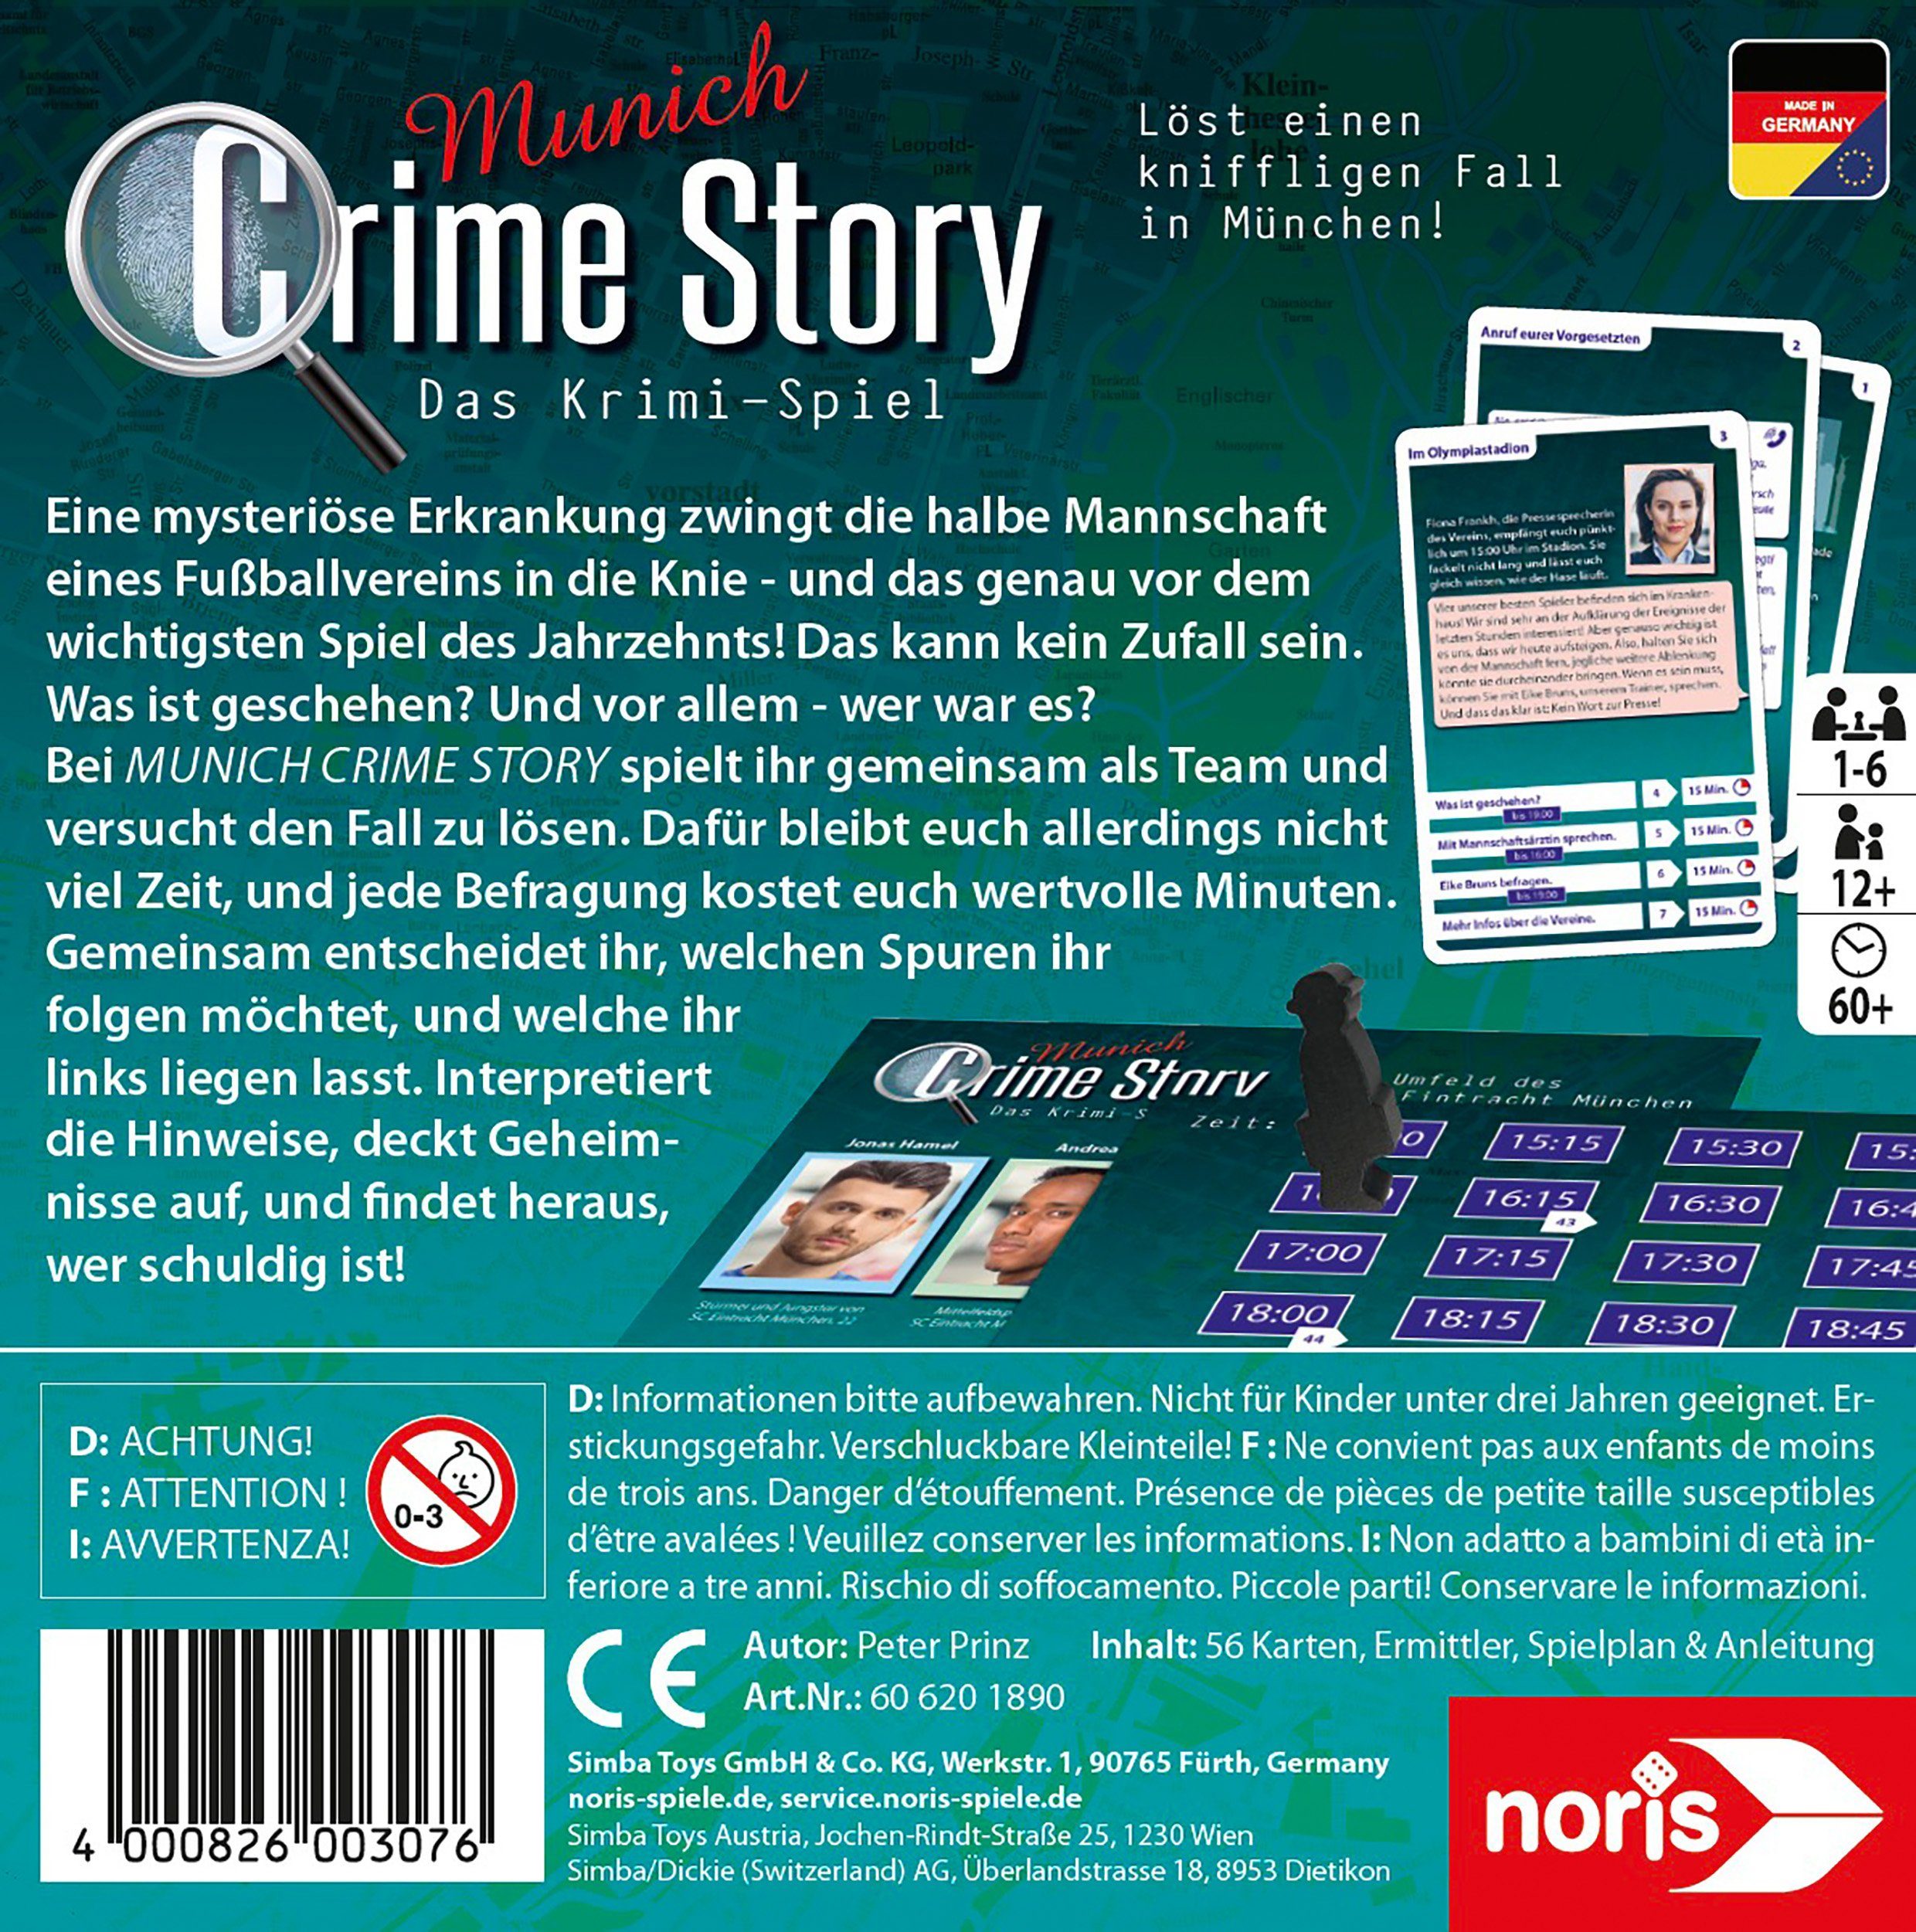 Noris Spiel, Crime Story - in Munich, Germany Made